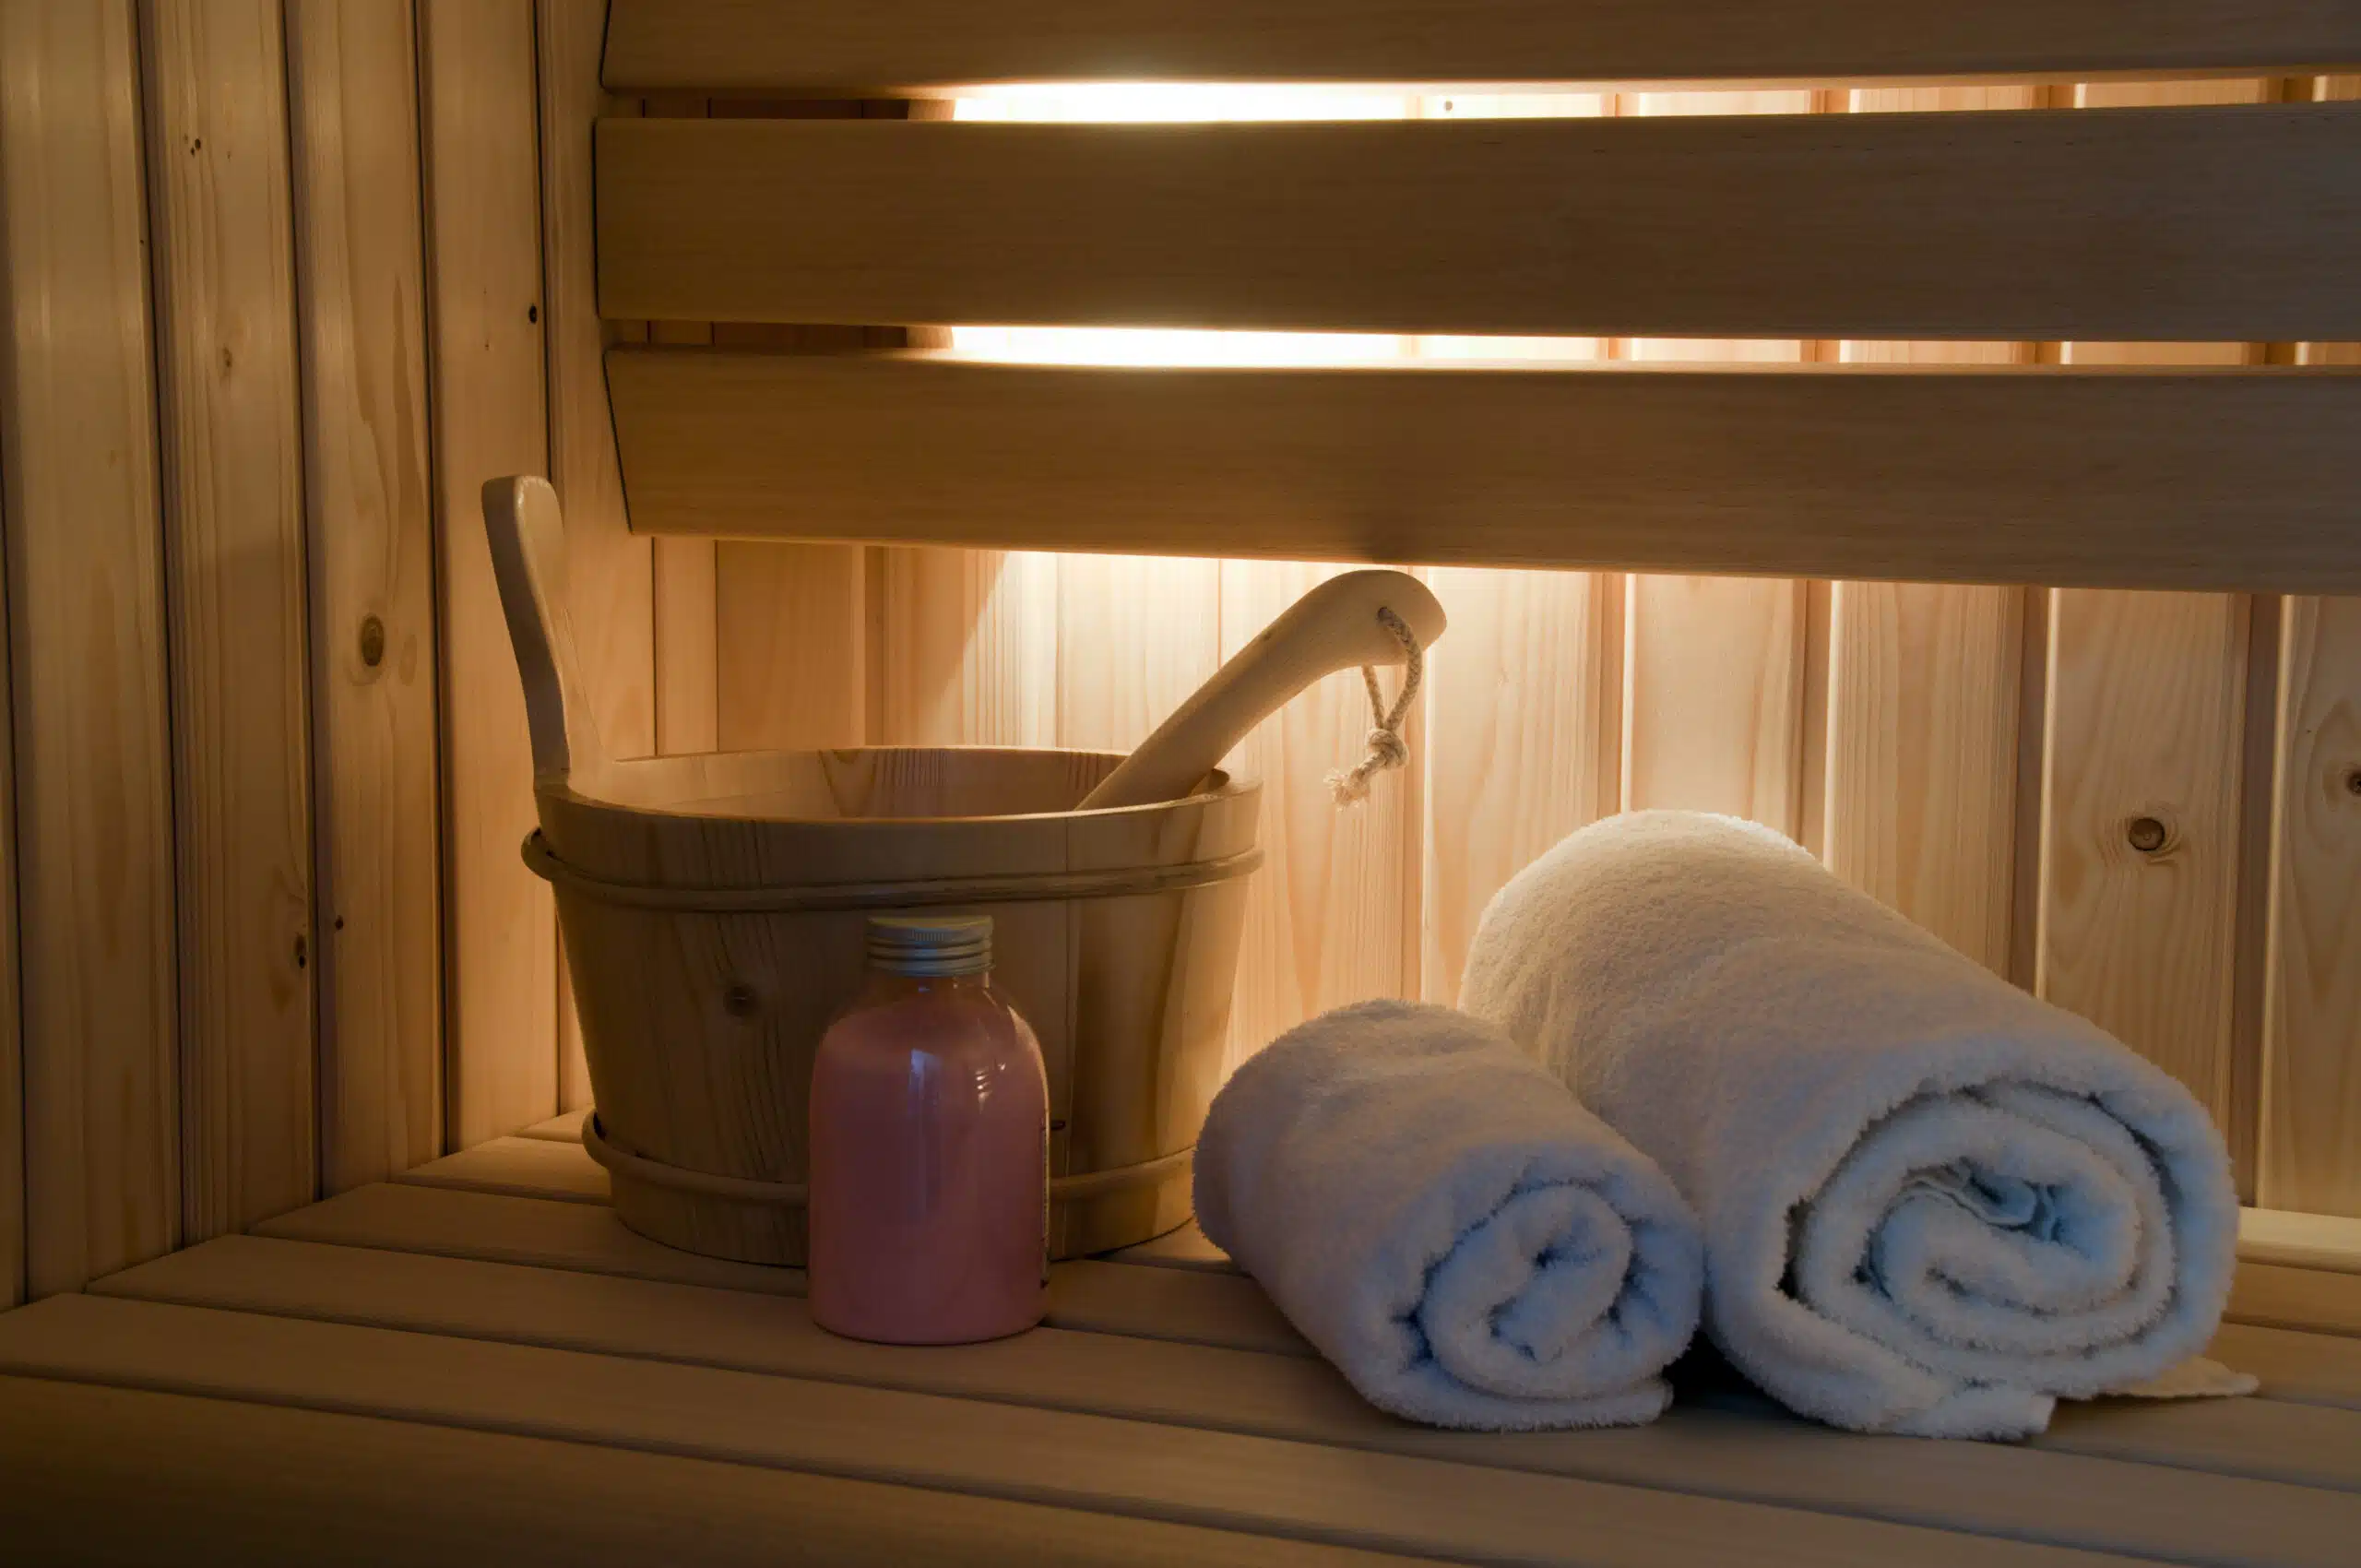 sauna interior with light and towel and scrub